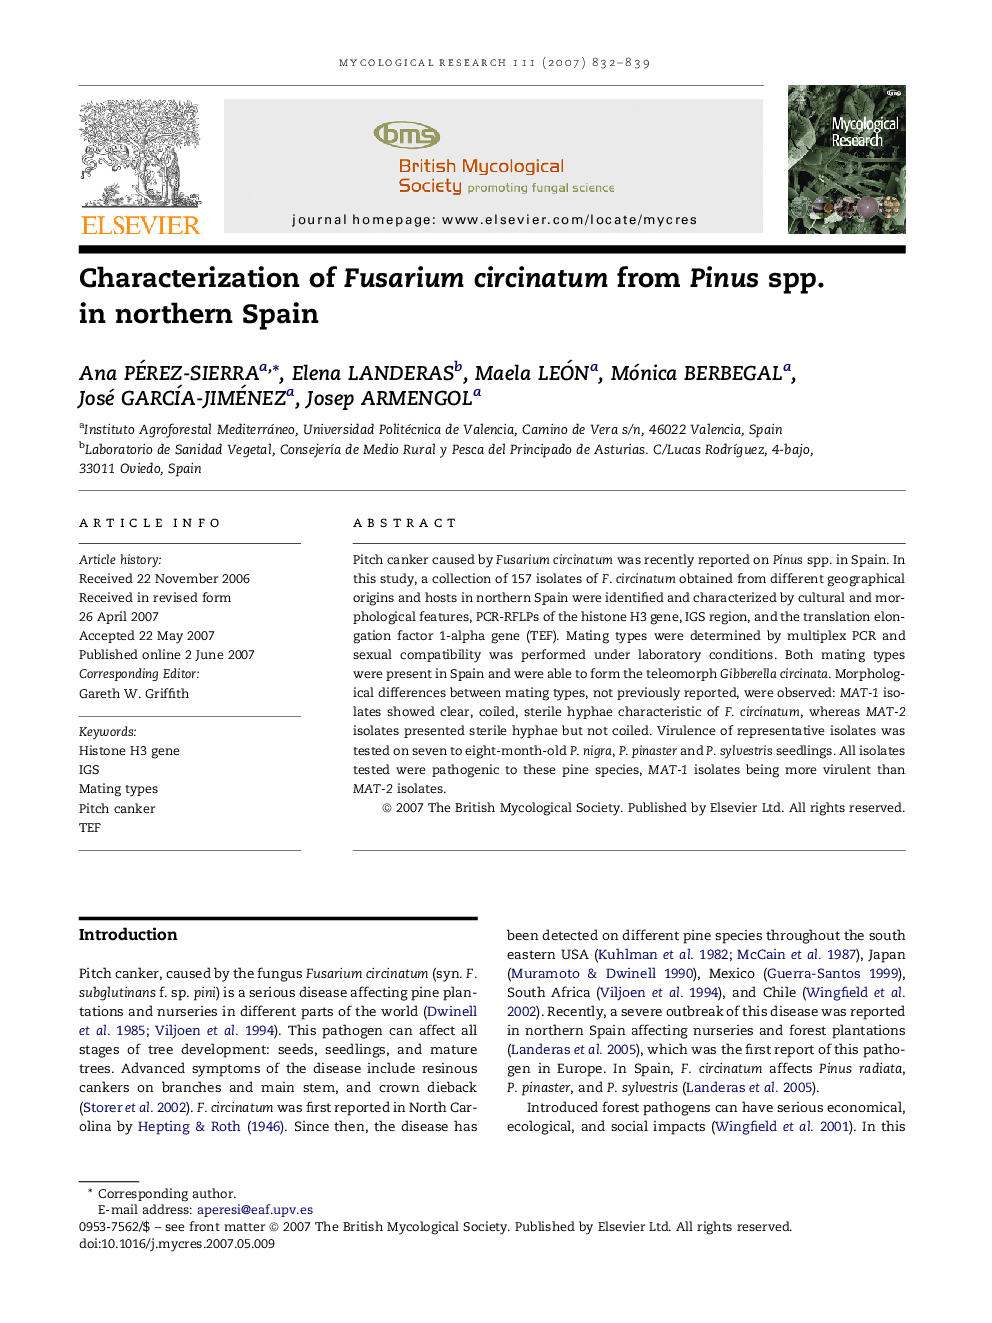 Characterization of Fusarium circinatum from Pinus spp. in northern Spain